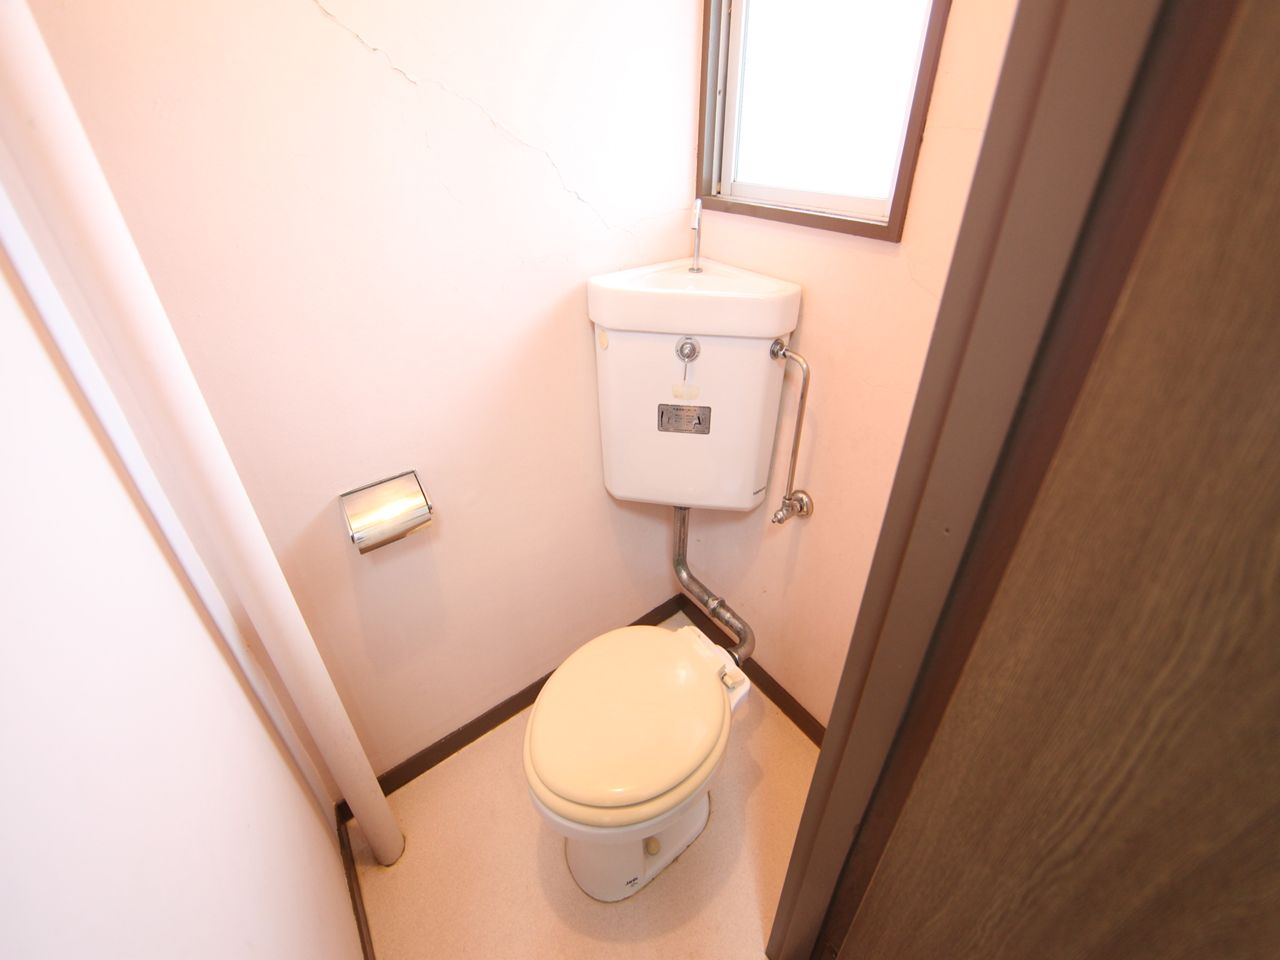 Toilet. Western-style toilet With windows (ventilation good)